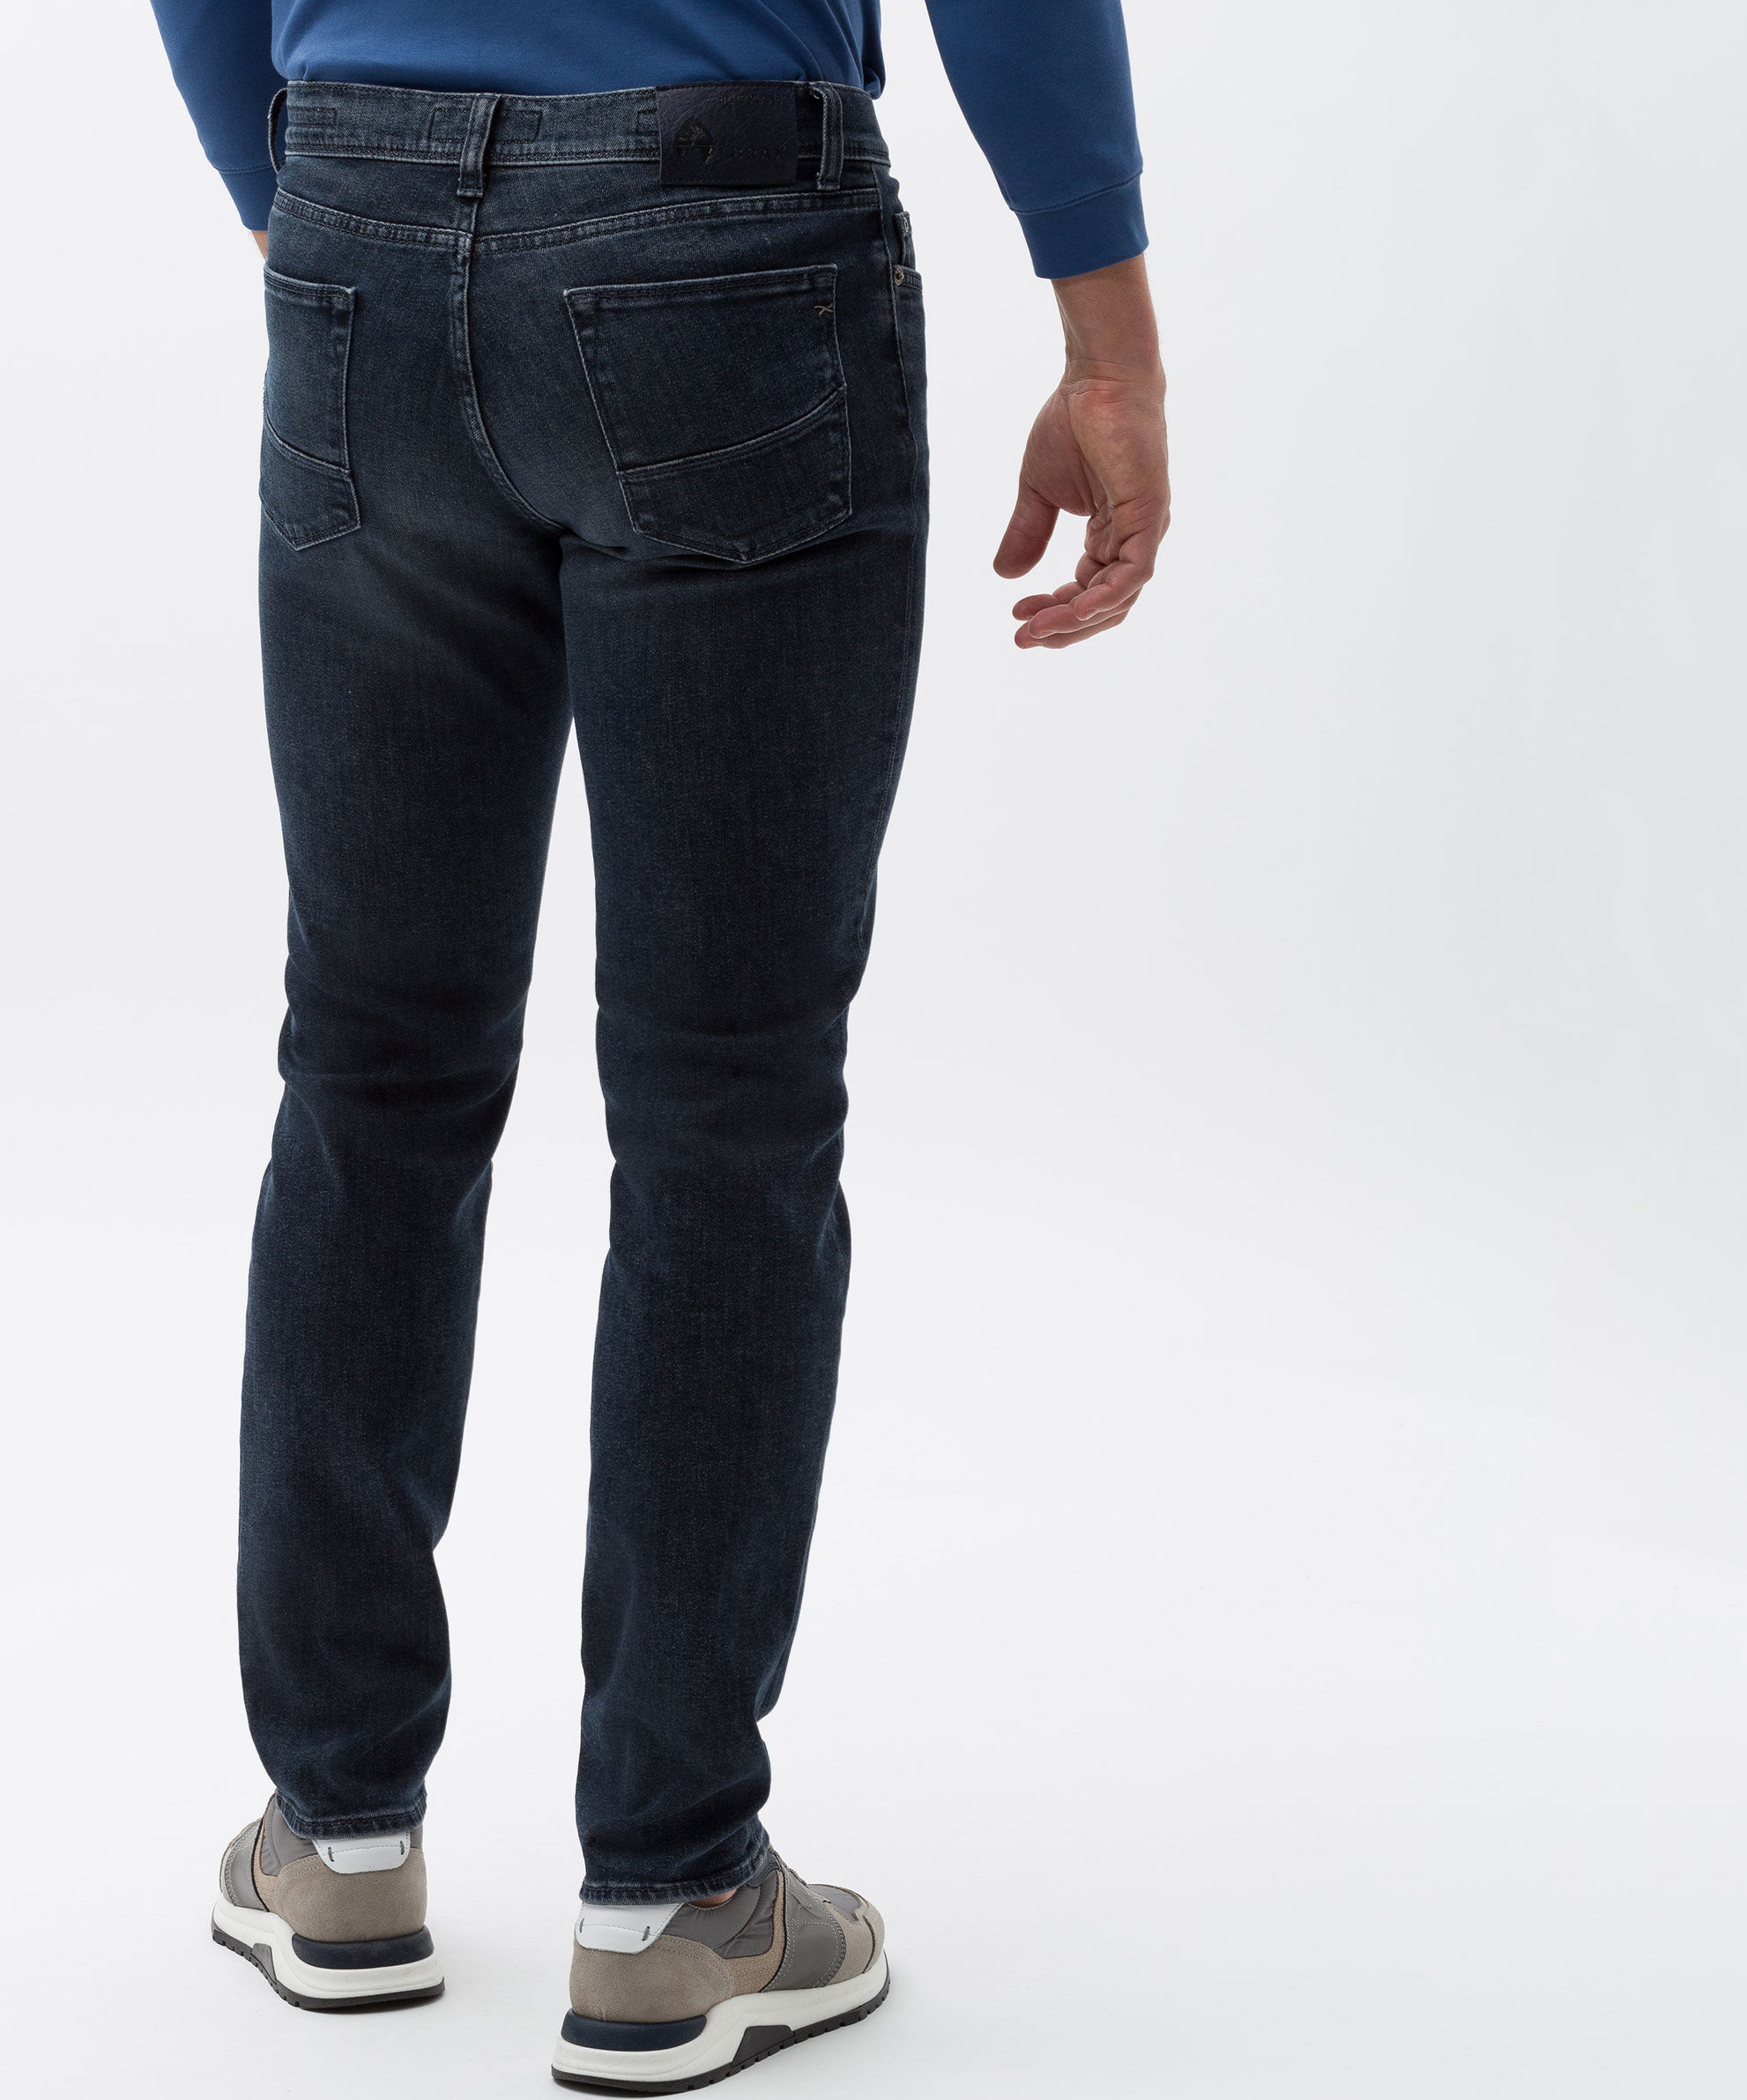 | CADIZ 85-6524.14 BRAX used FLEX 7962220 blue Jeans Cadiz Brax Männer | DENIM Jeans - | Brax Jeans-Manufaktur | ORGANIC vintage |